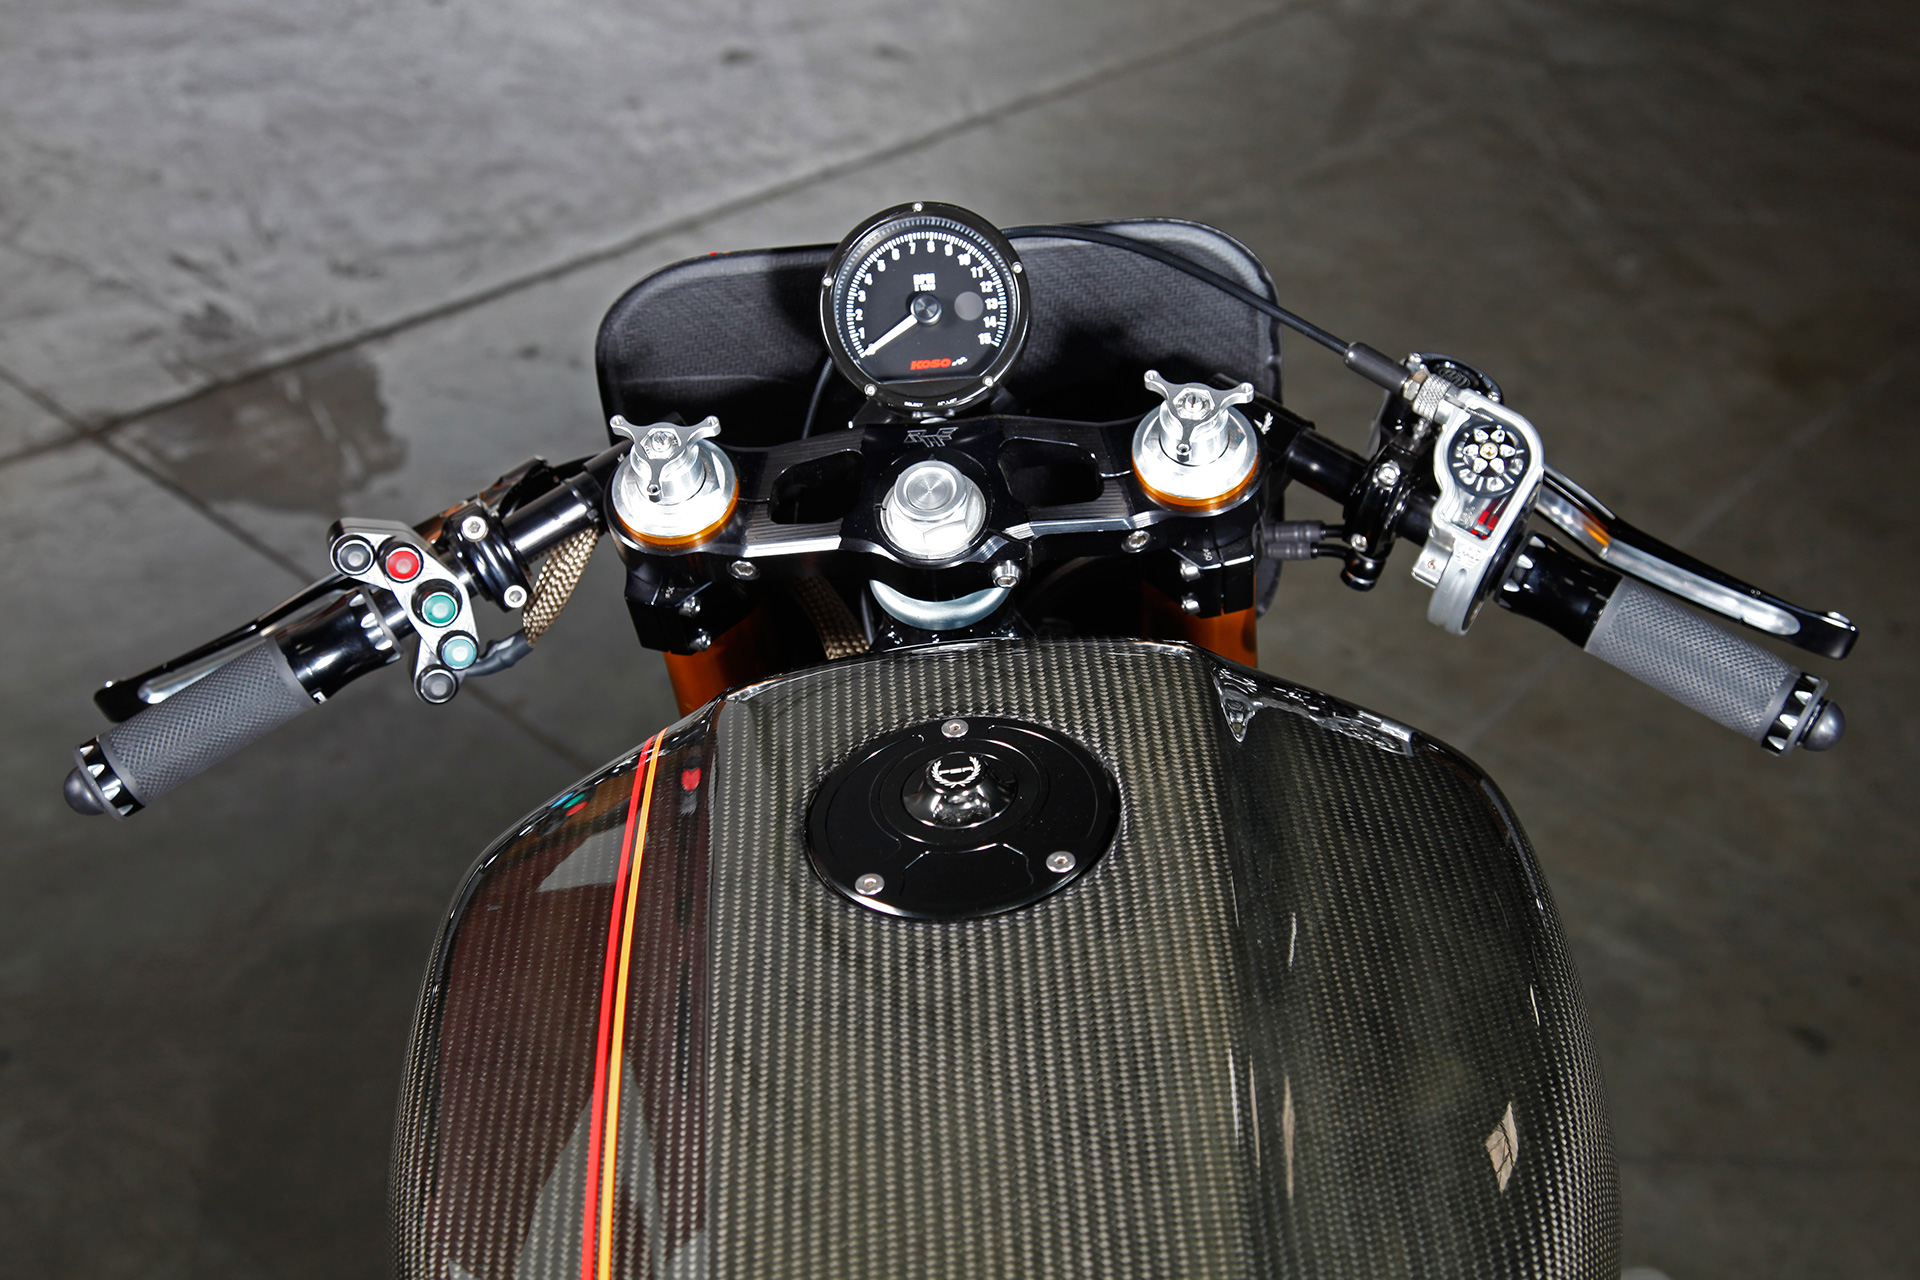 Honda CBX Superbike Trackbike Build by Nick O'Kane